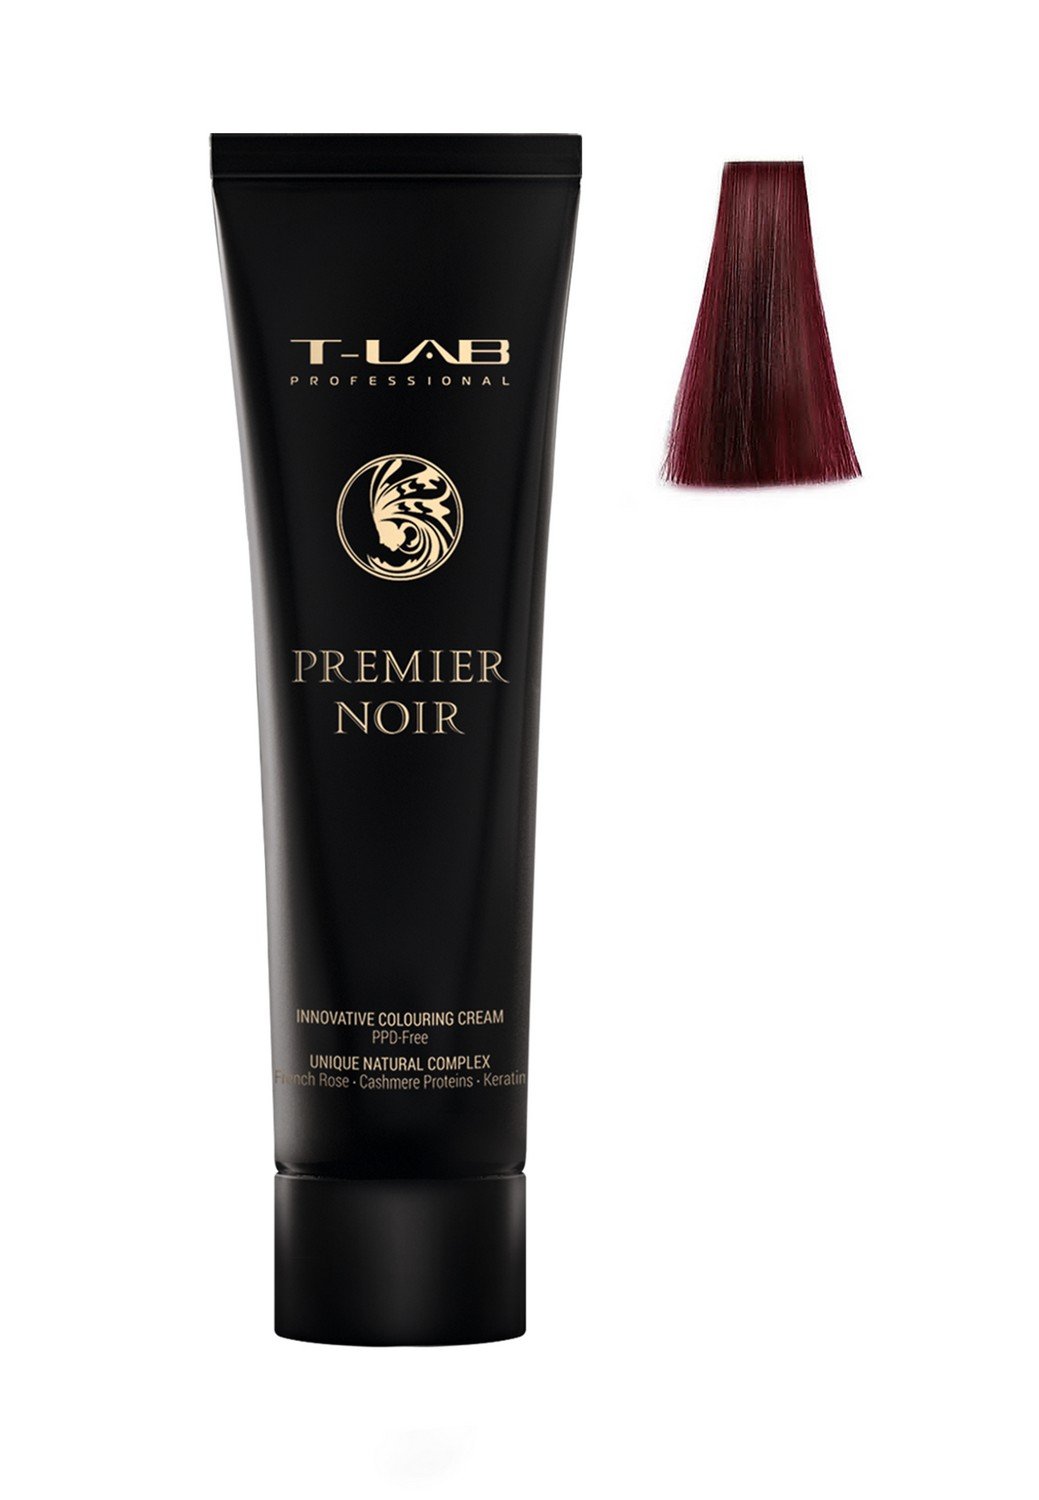 Крем-фарба T-LAB Professional Premier Noir colouring cream, відтінок 7.44 (deep copper blonde) - фото 2